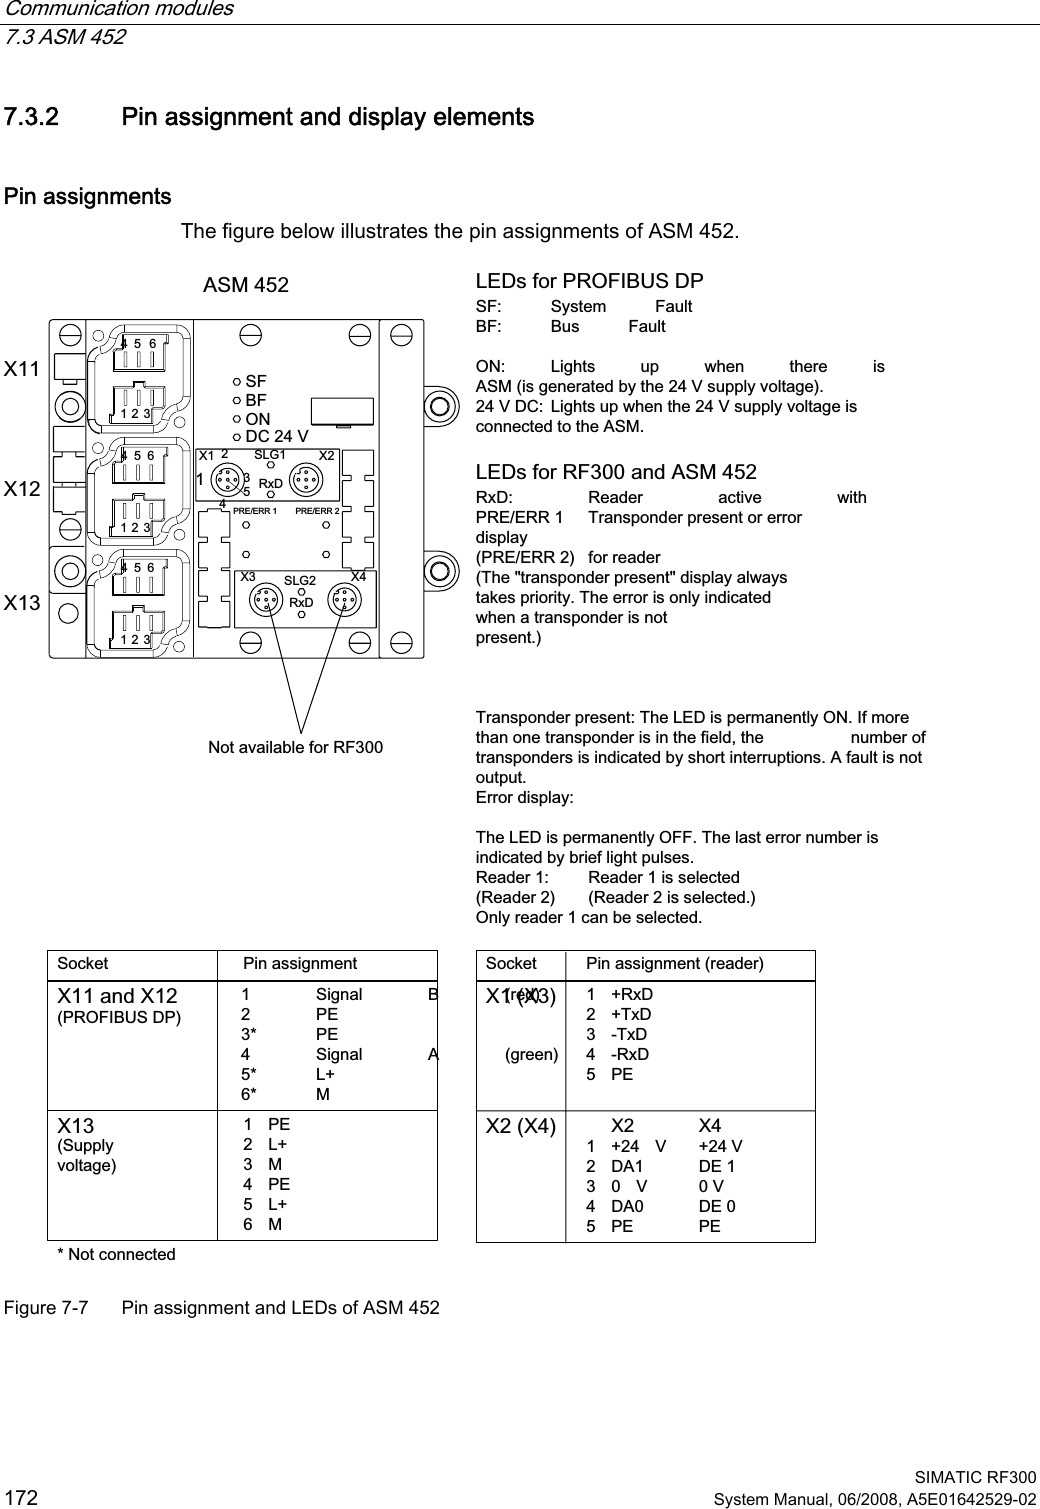 Communication modules   7.3 ASM 452  SIMATIC RF300 172 System Manual, 06/2008, A5E01642529-02 7.3.2 Pin assignment and display elements Pin assignments The figure below illustrates the pin assignments of ASM 452. 352),%86&apos;36RFNHW;DQG;3LQDVVLJQPHQW 6LJQDO % UHG 3( 3( 6LJQDO $ JUHHQ / 06XSSO\YROWDJH/(&apos;VIRU5)DQG$605[&apos; 5HDGHU DFWLYH ZLWK35((55 7UDQVSRQGHUSUHVHQWRUHUURU GLVSOD\35((55 IRUUHDGHU7KHWUDQVSRQGHUSUHVHQWGLVSOD\DOZD\VWDNHVSULRULW\7KHHUURULVRQO\LQGLFDWHGZKHQDWUDQVSRQGHULVQRWSUHVHQW7UDQVSRQGHUSUHVHQW7KH/(&apos;LVSHUPDQHQWO\21,IPRUHWKDQRQHWUDQVSRQGHULVLQWKHILHOGWKH  QXPEHURIWUDQVSRQGHUVLVLQGLFDWHGE\VKRUWLQWHUUXSWLRQV$IDXOWLVQRWRXWSXW(UURUGLVSOD\7KH/(&apos;LVSHUPDQHQWO\2))7KHODVWHUURUQXPEHULVLQGLFDWHGE\EULHIOLJKWSXOVHV5HDGHU 5HDGHULVVHOHFWHG5HDGHU 5HDGHULVVHOHFWHG2QO\UHDGHUFDQEHVHOHFWHG/(&apos;VIRU352),%86&apos;36) 6\VWHP )DXOW%) %XV )DXOW21 /LJKWV XS ZKHQ WKHUH LV$60LVJHQHUDWHGE\WKH9VXSSO\YROWDJH9&apos;&amp; /LJKWVXSZKHQWKH9VXSSO\YROWDJHLVFRQQHFWHGWRWKH$601RWFRQQHFWHG3LQDVVLJQPHQWUHDGHU6RFNHW1RWDYDLODEOHIRU5);;;;$60; ;; ;;;;&apos;&amp;95[&apos;35((556/*5[&apos;6/*35((556)%)21 3( / 0 3( / 0; 5[&apos; 7[&apos; 7[&apos; 5[&apos; 3(; ;  9 9 &apos;$ &apos;(  9 9 &apos;$ &apos;( 3( 3( Figure 7-7  Pin assignment and LEDs of ASM 452 